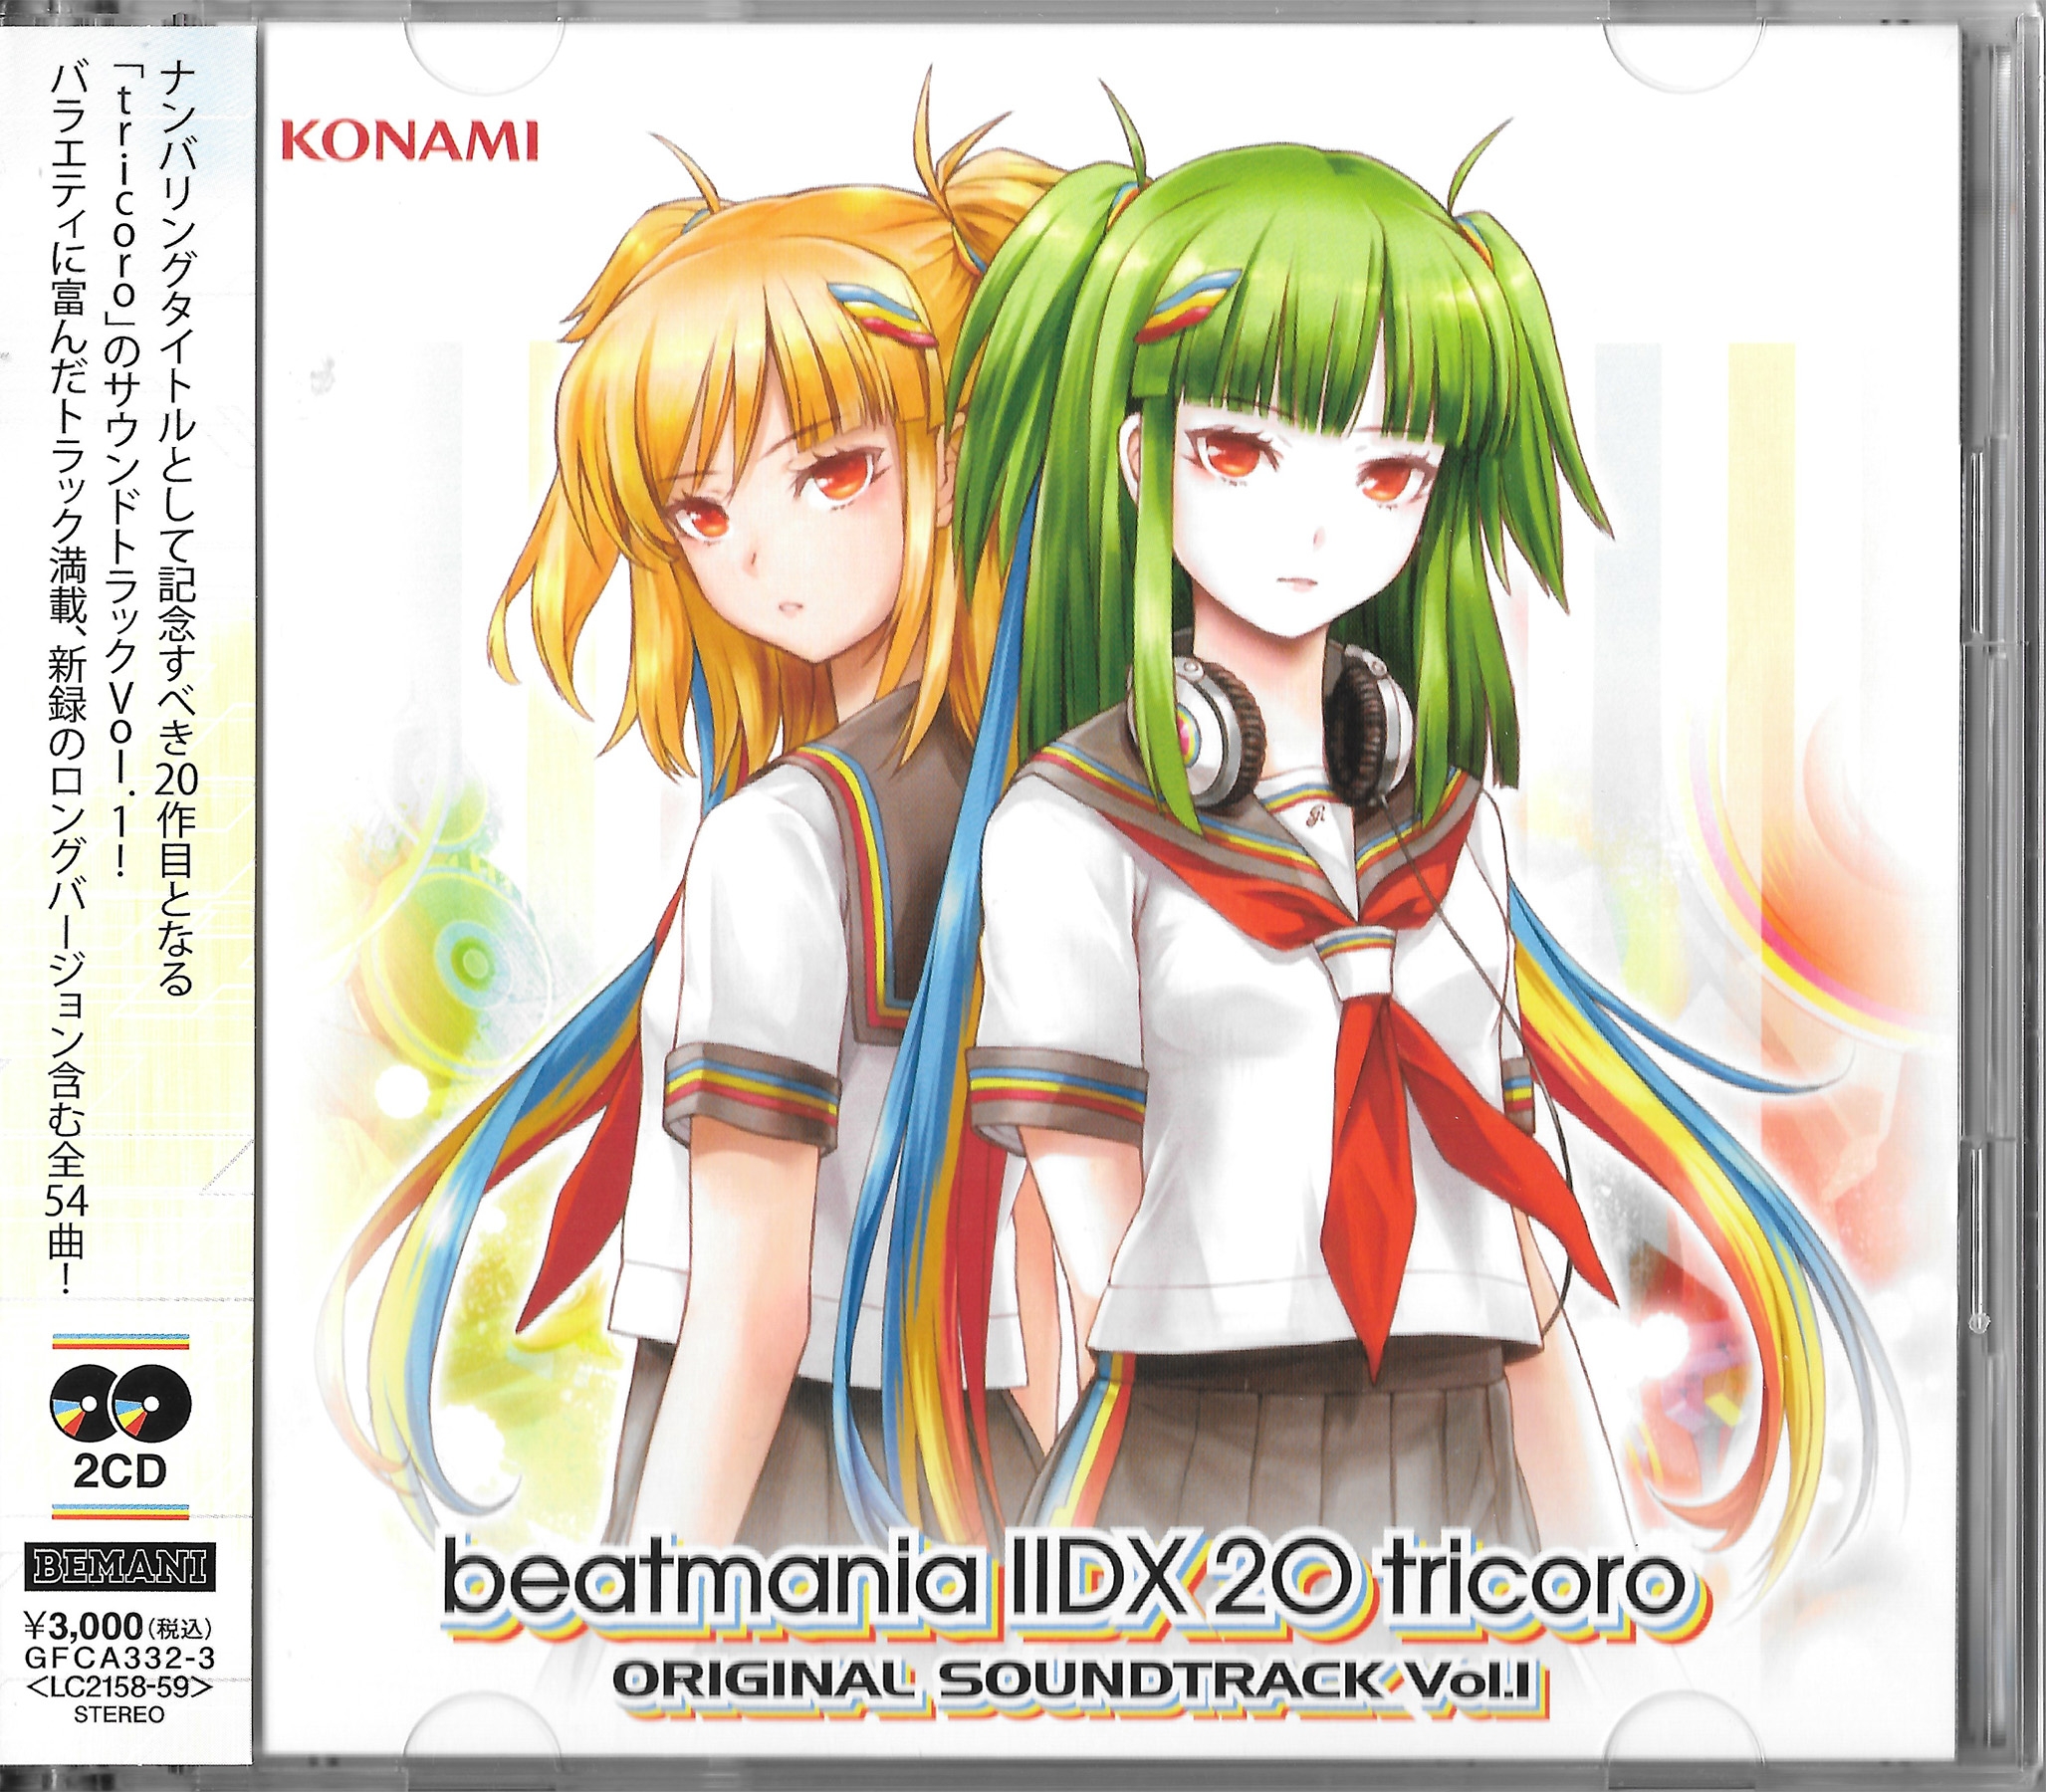 beatmania IIDX 20 tricoro ORIGINAL SOUNDTRACK Vol.1 (2013) MP3 